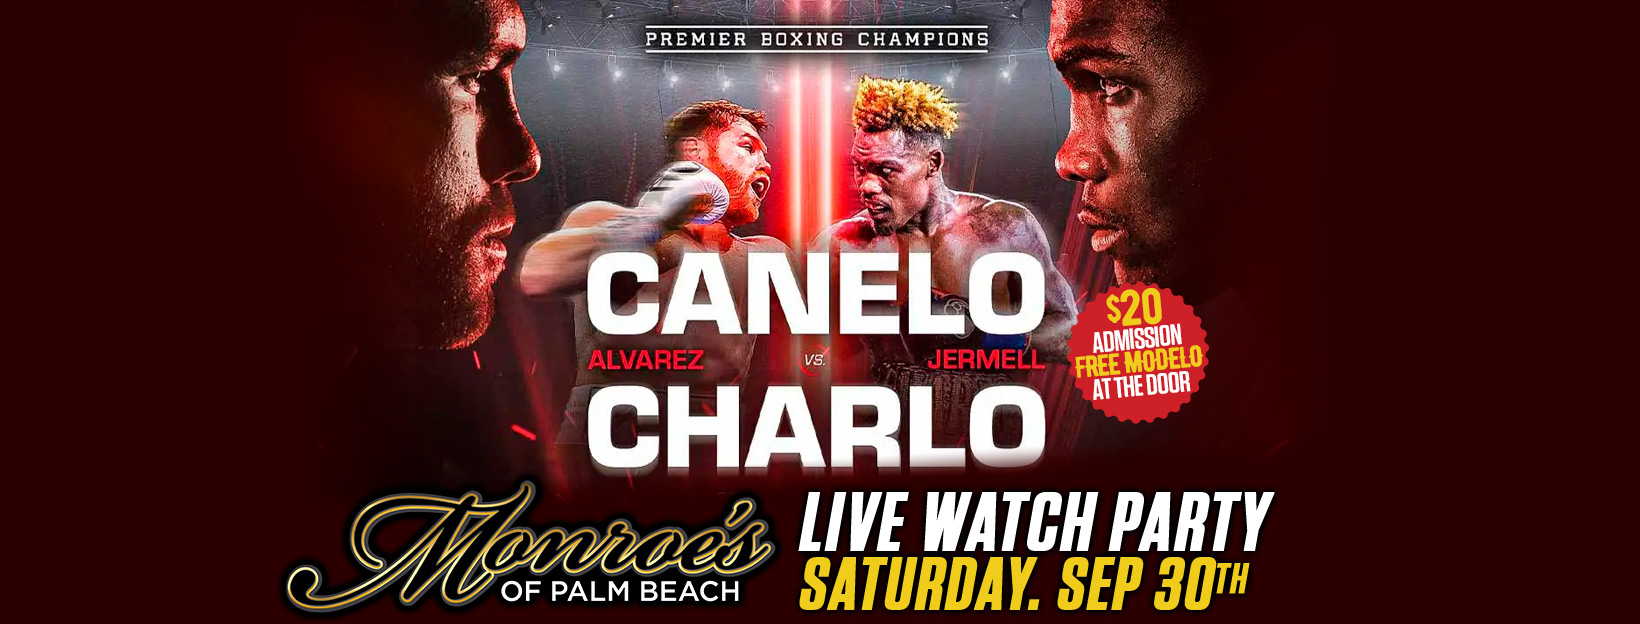 Canelo vs Charlo sat Sept 30th